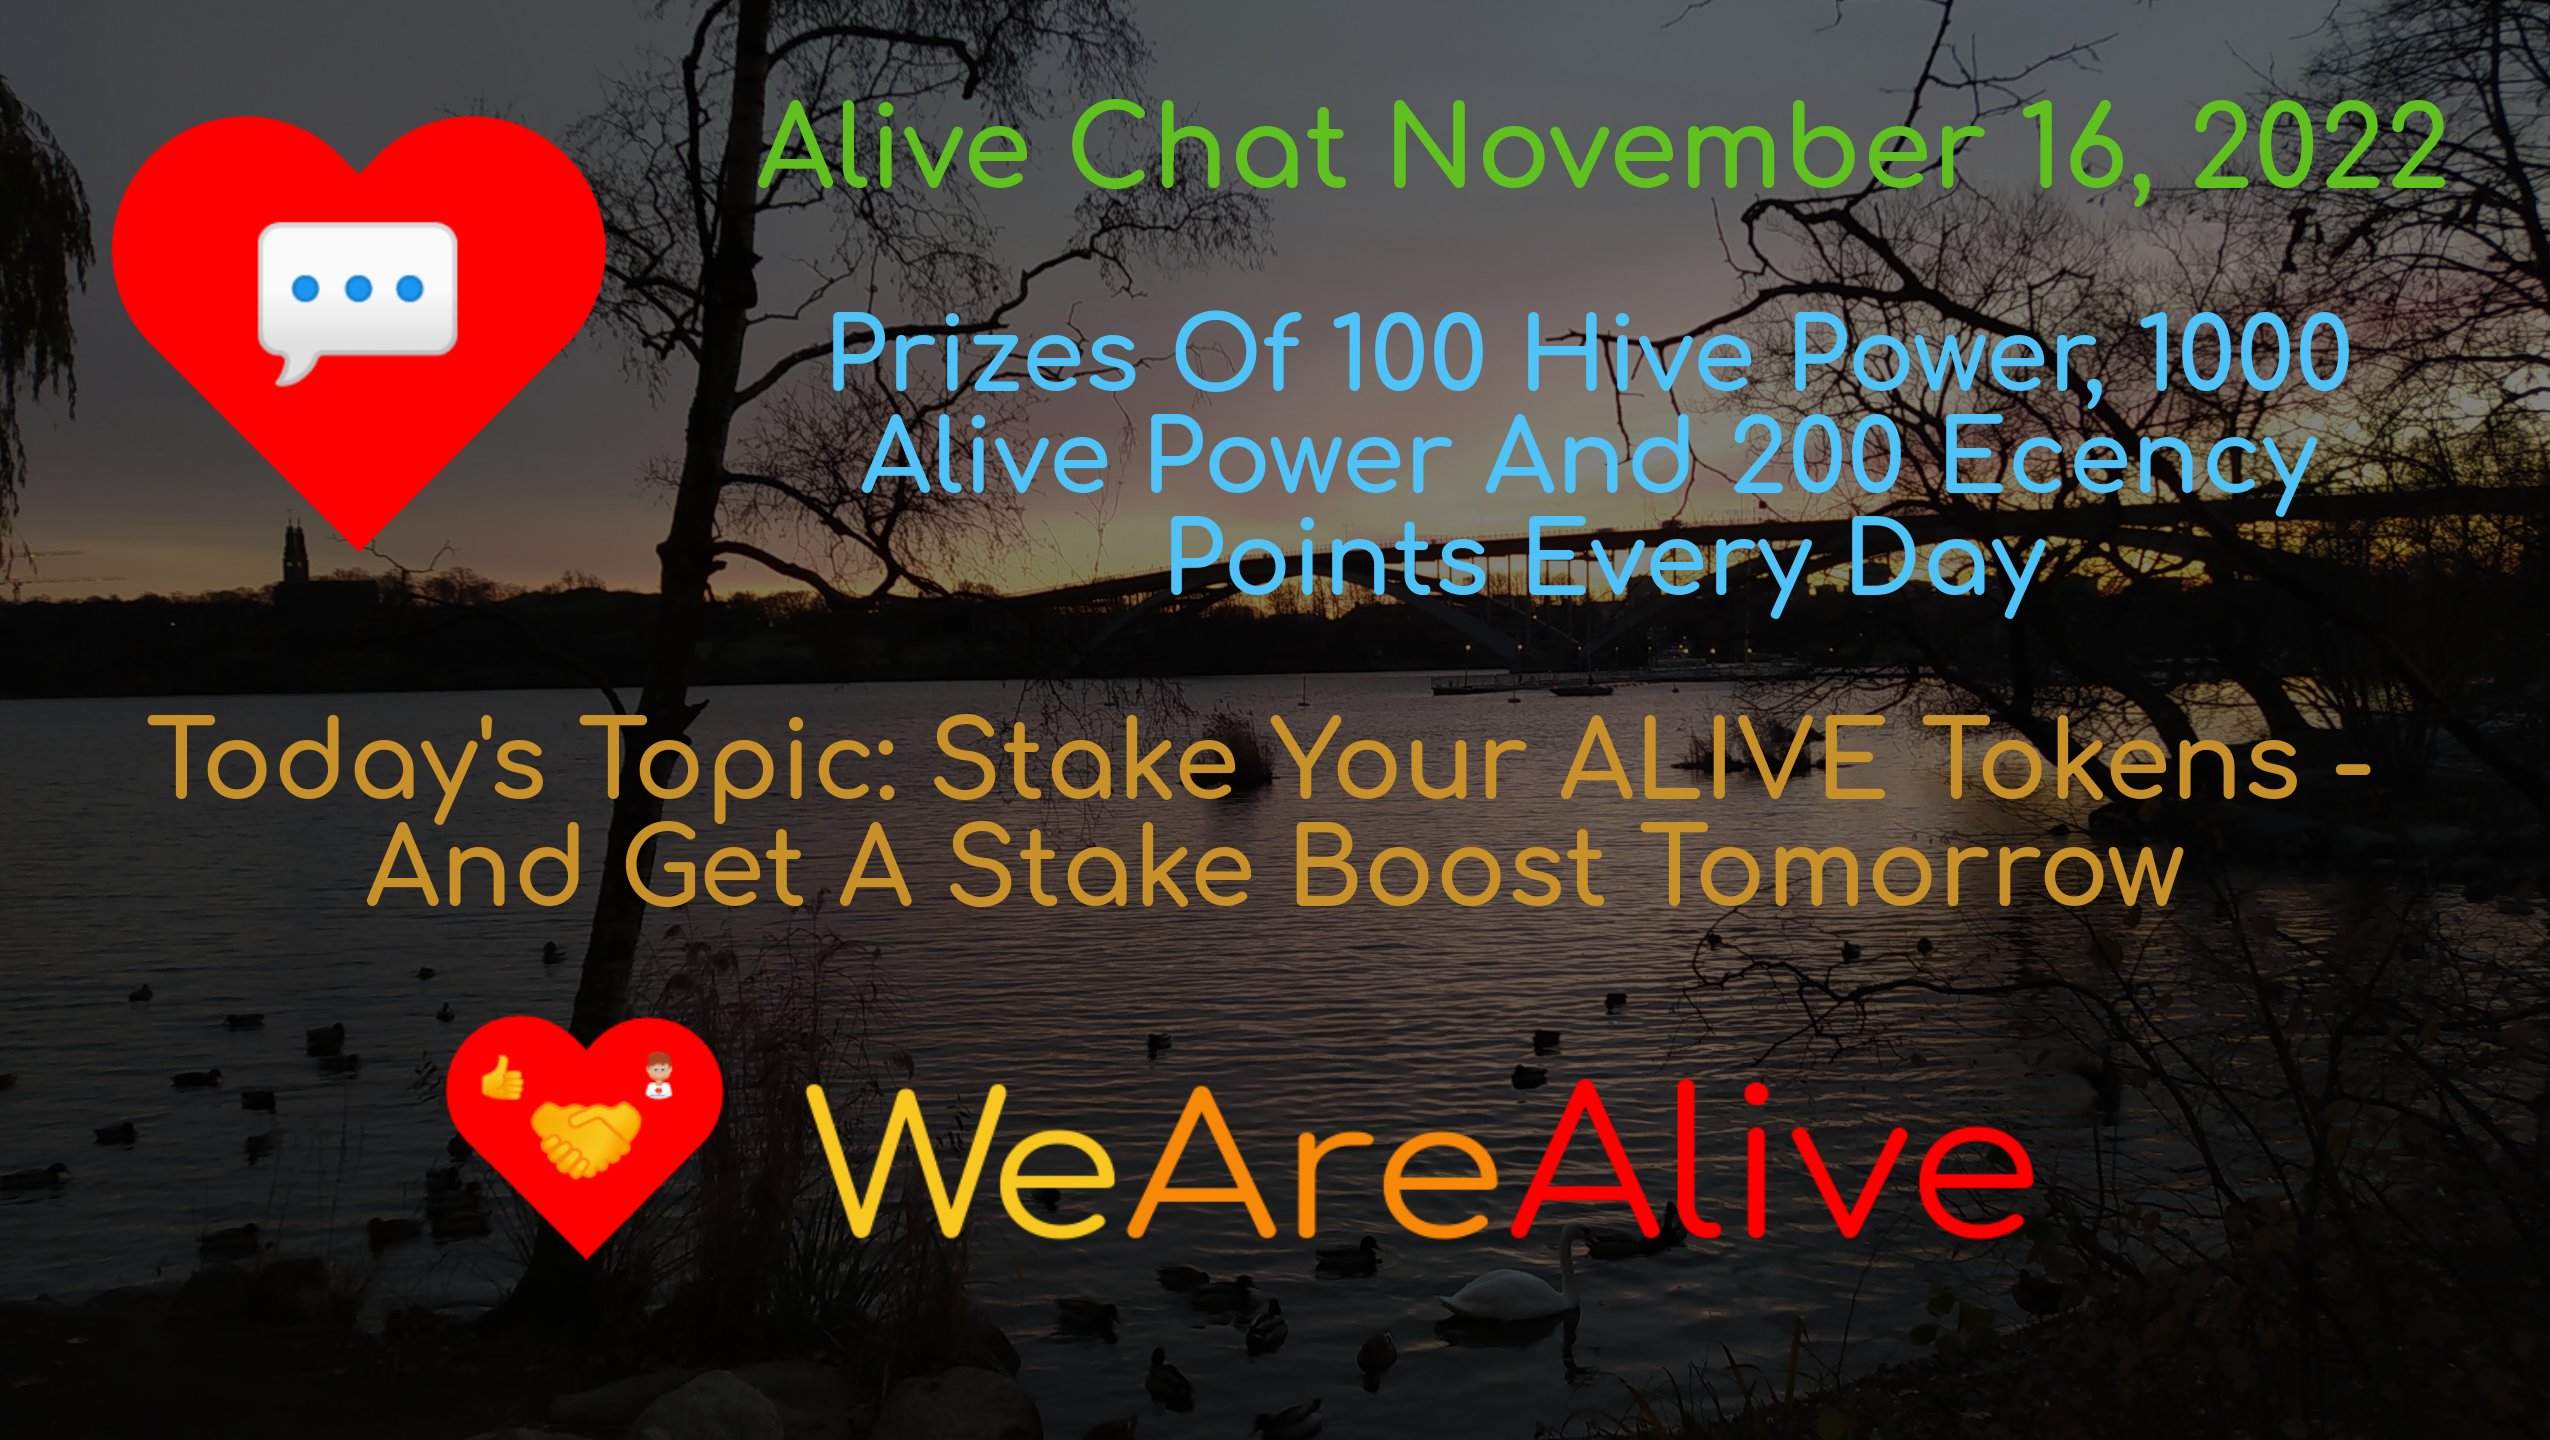 @alive.chat/alive-chat-november-16-2022